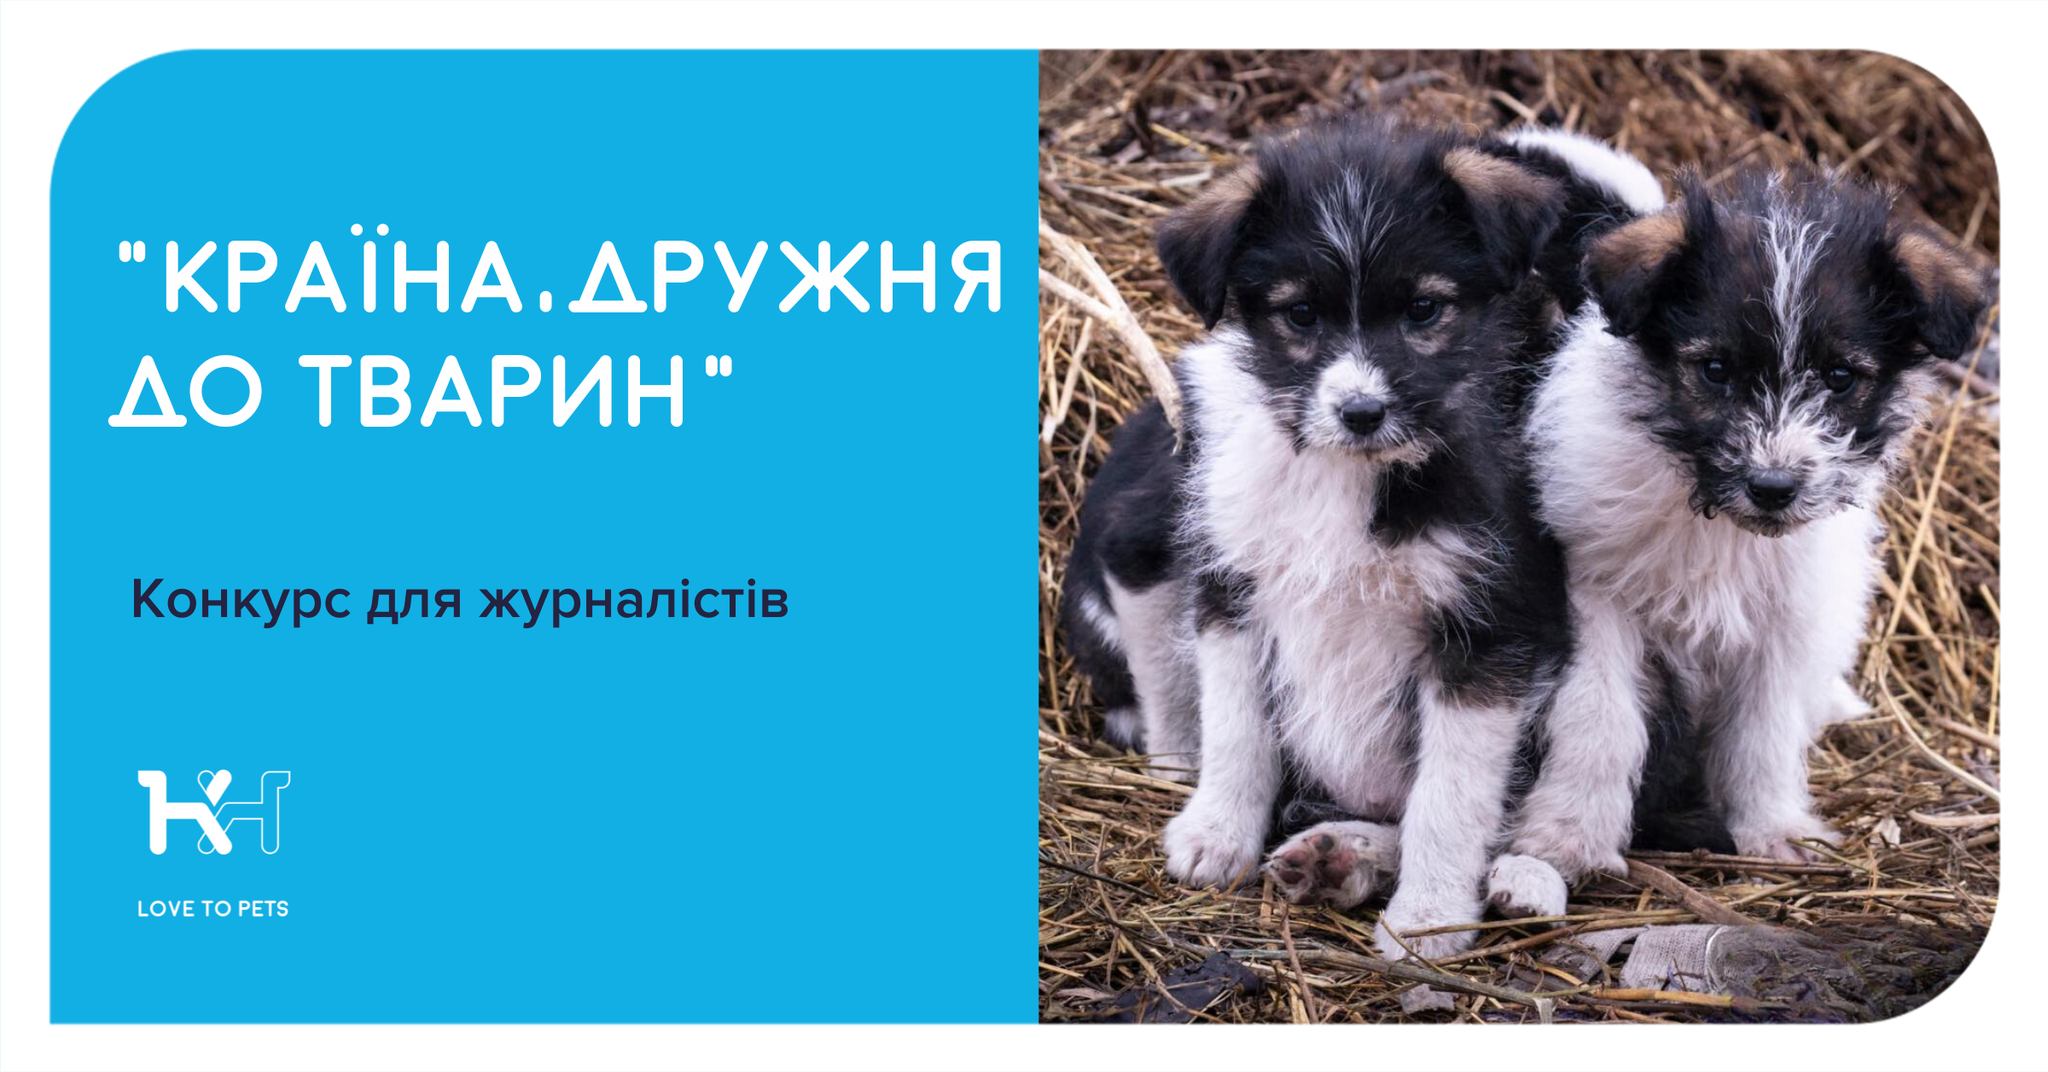 Contest for journalists covering animal welfare [Ukraine]